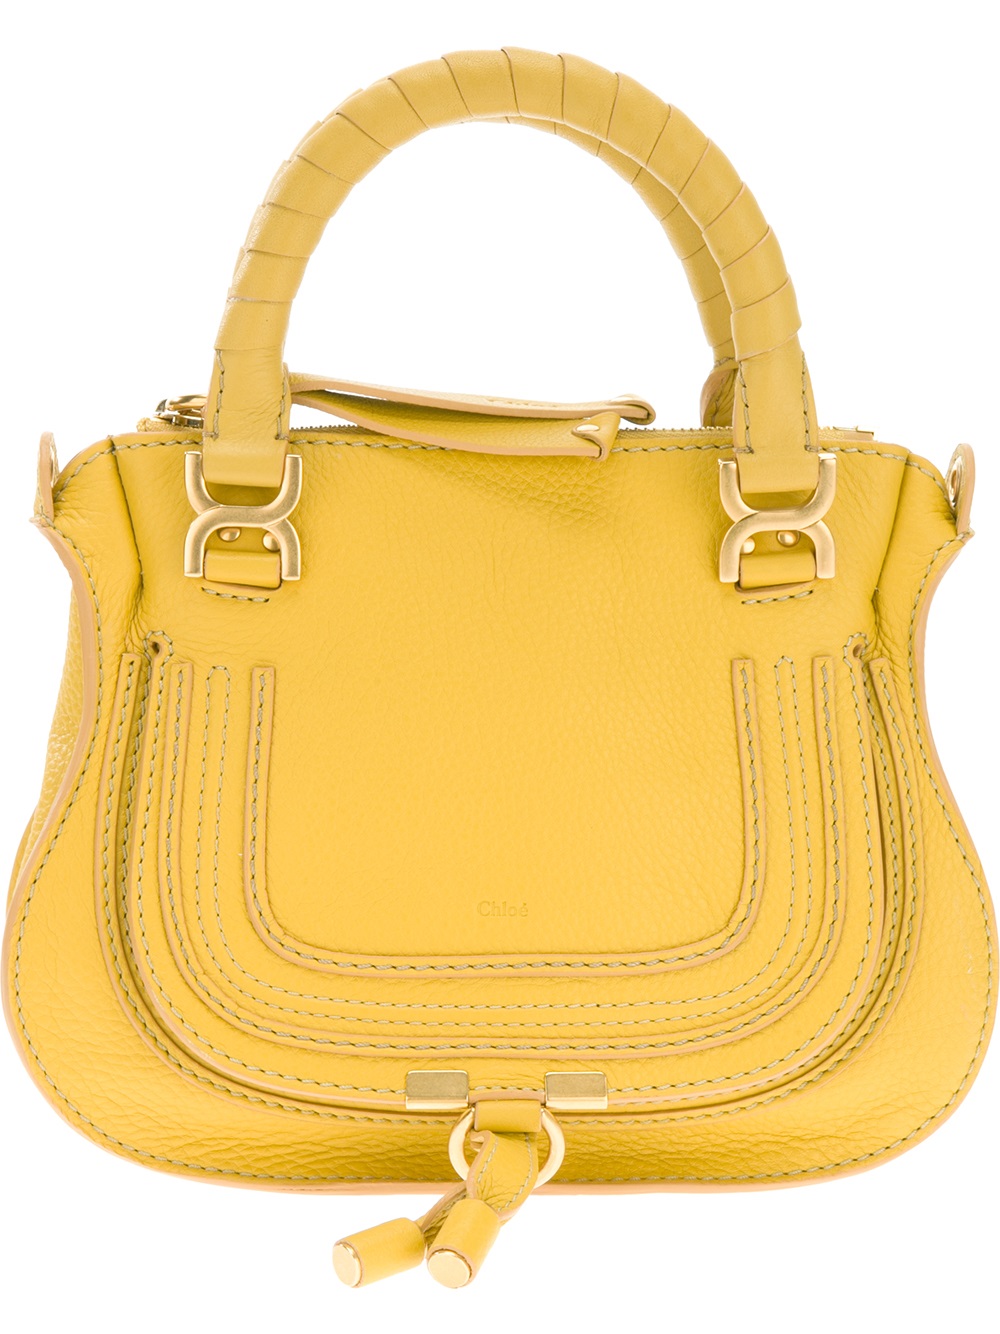 Lyst - Chloé Marcie Mini Shoulder Bag in Yellow